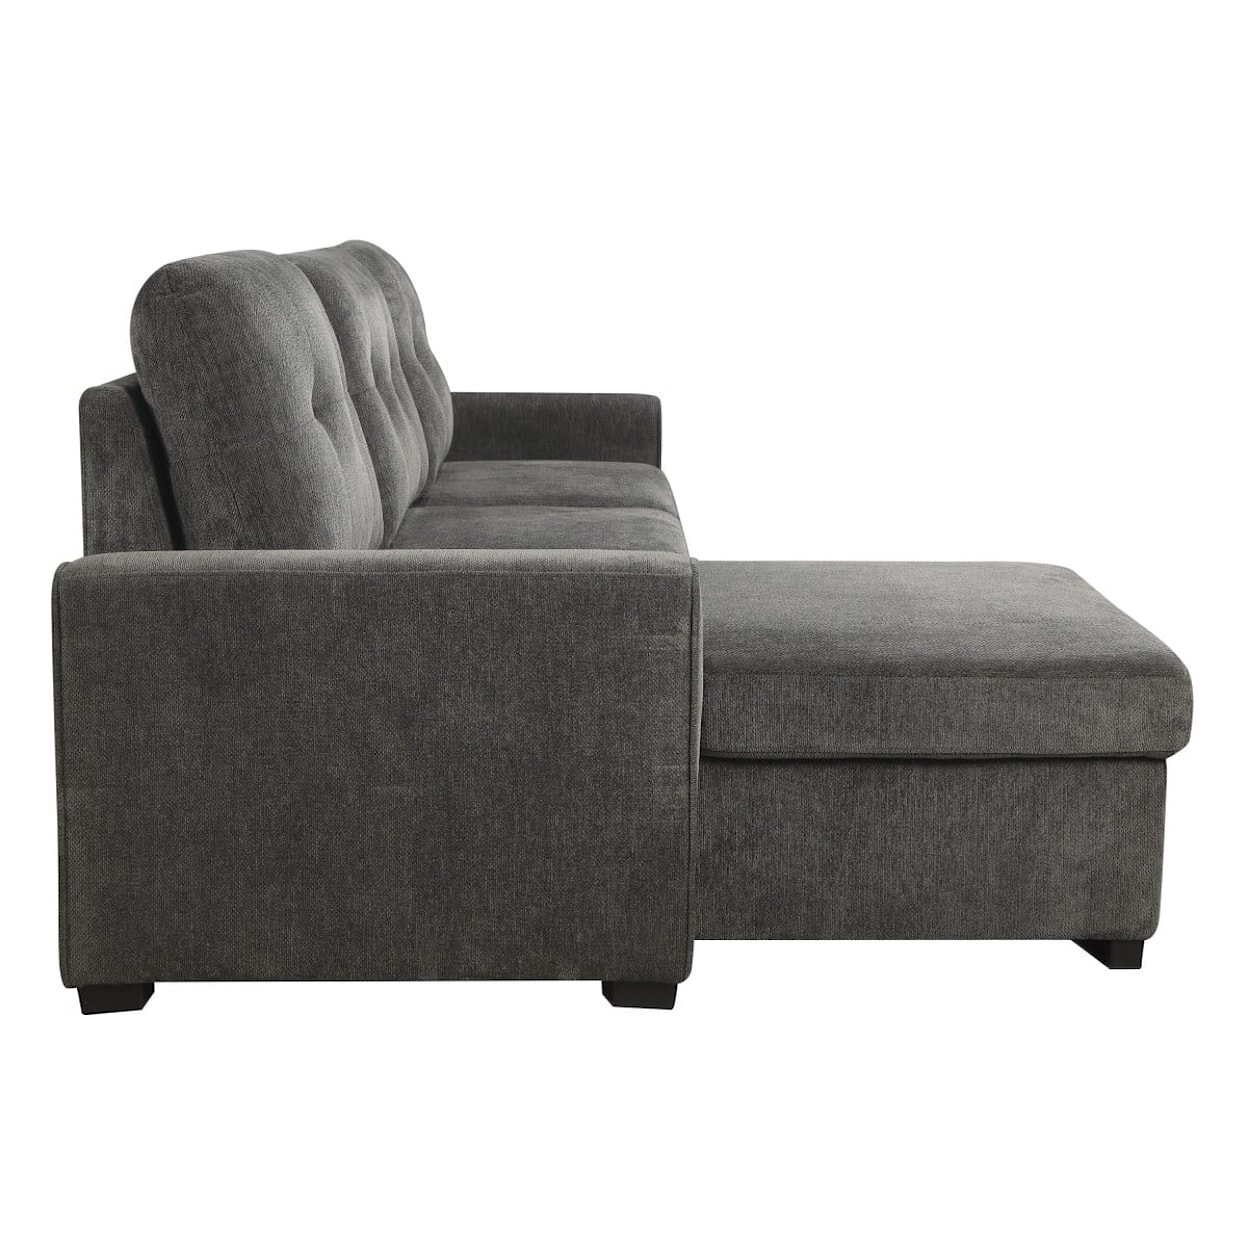 Homelegance Carolina 2-Piece Reversible Sectional Sofa